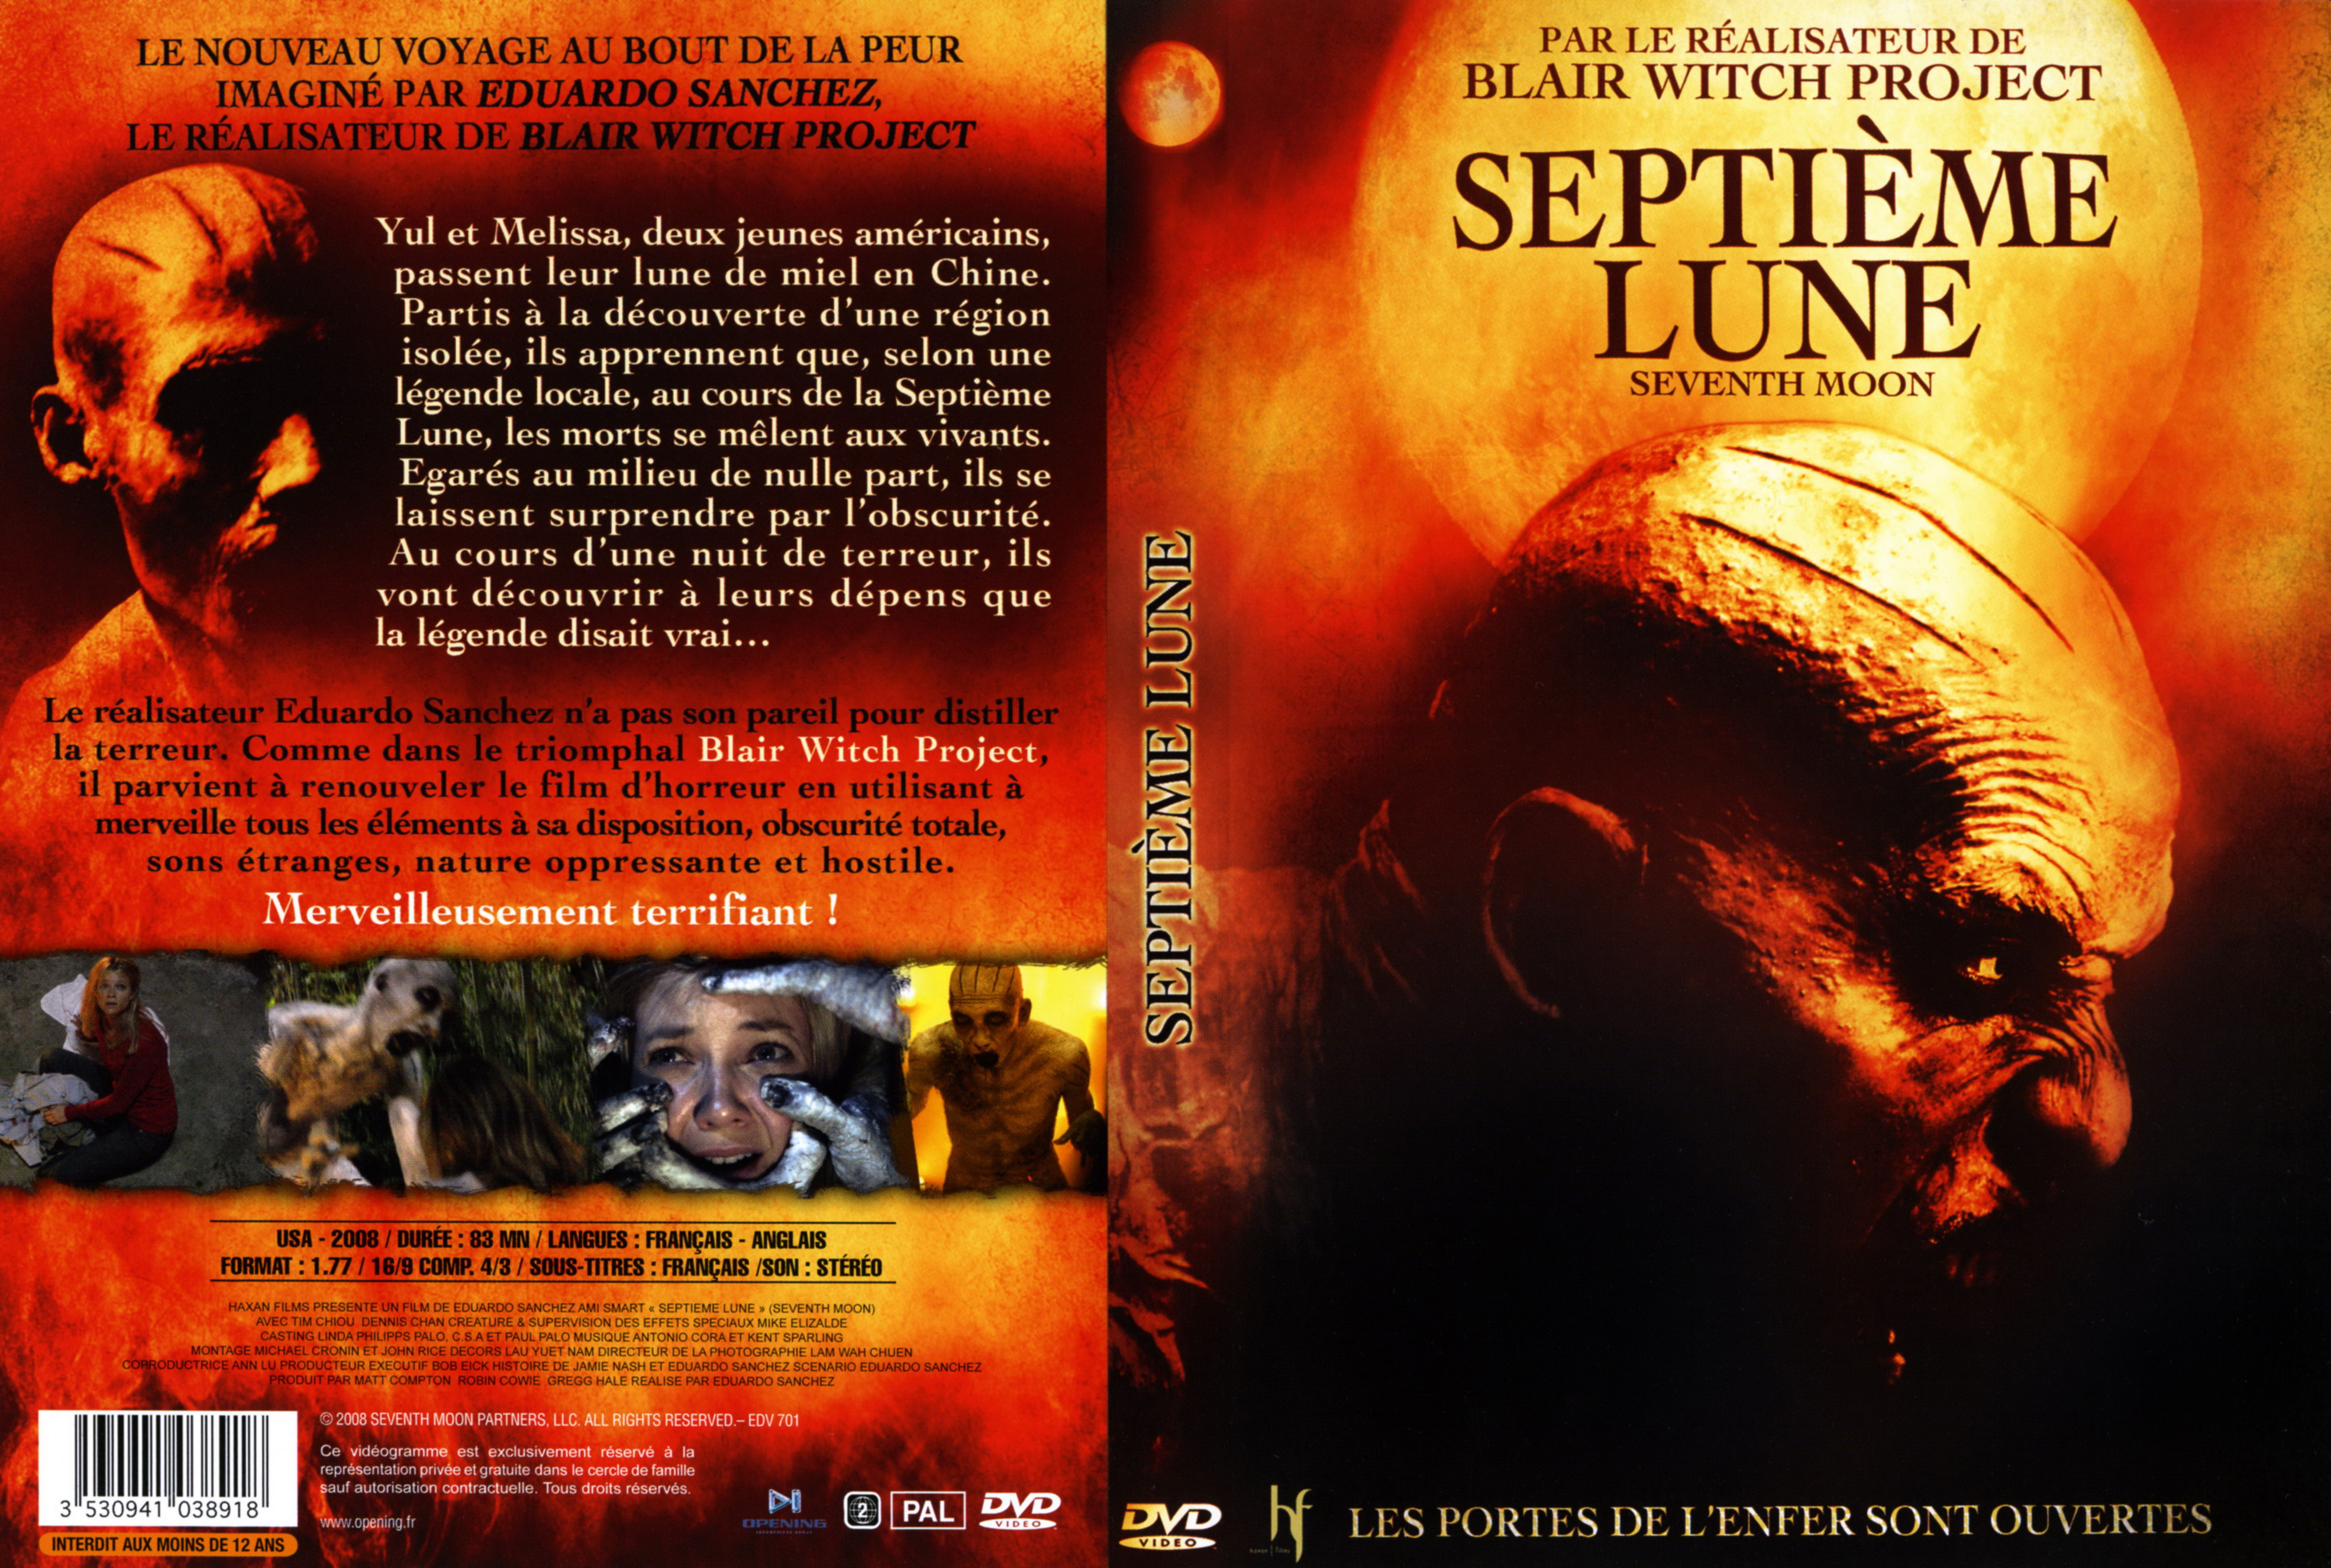 Jaquette DVD Septieme lune